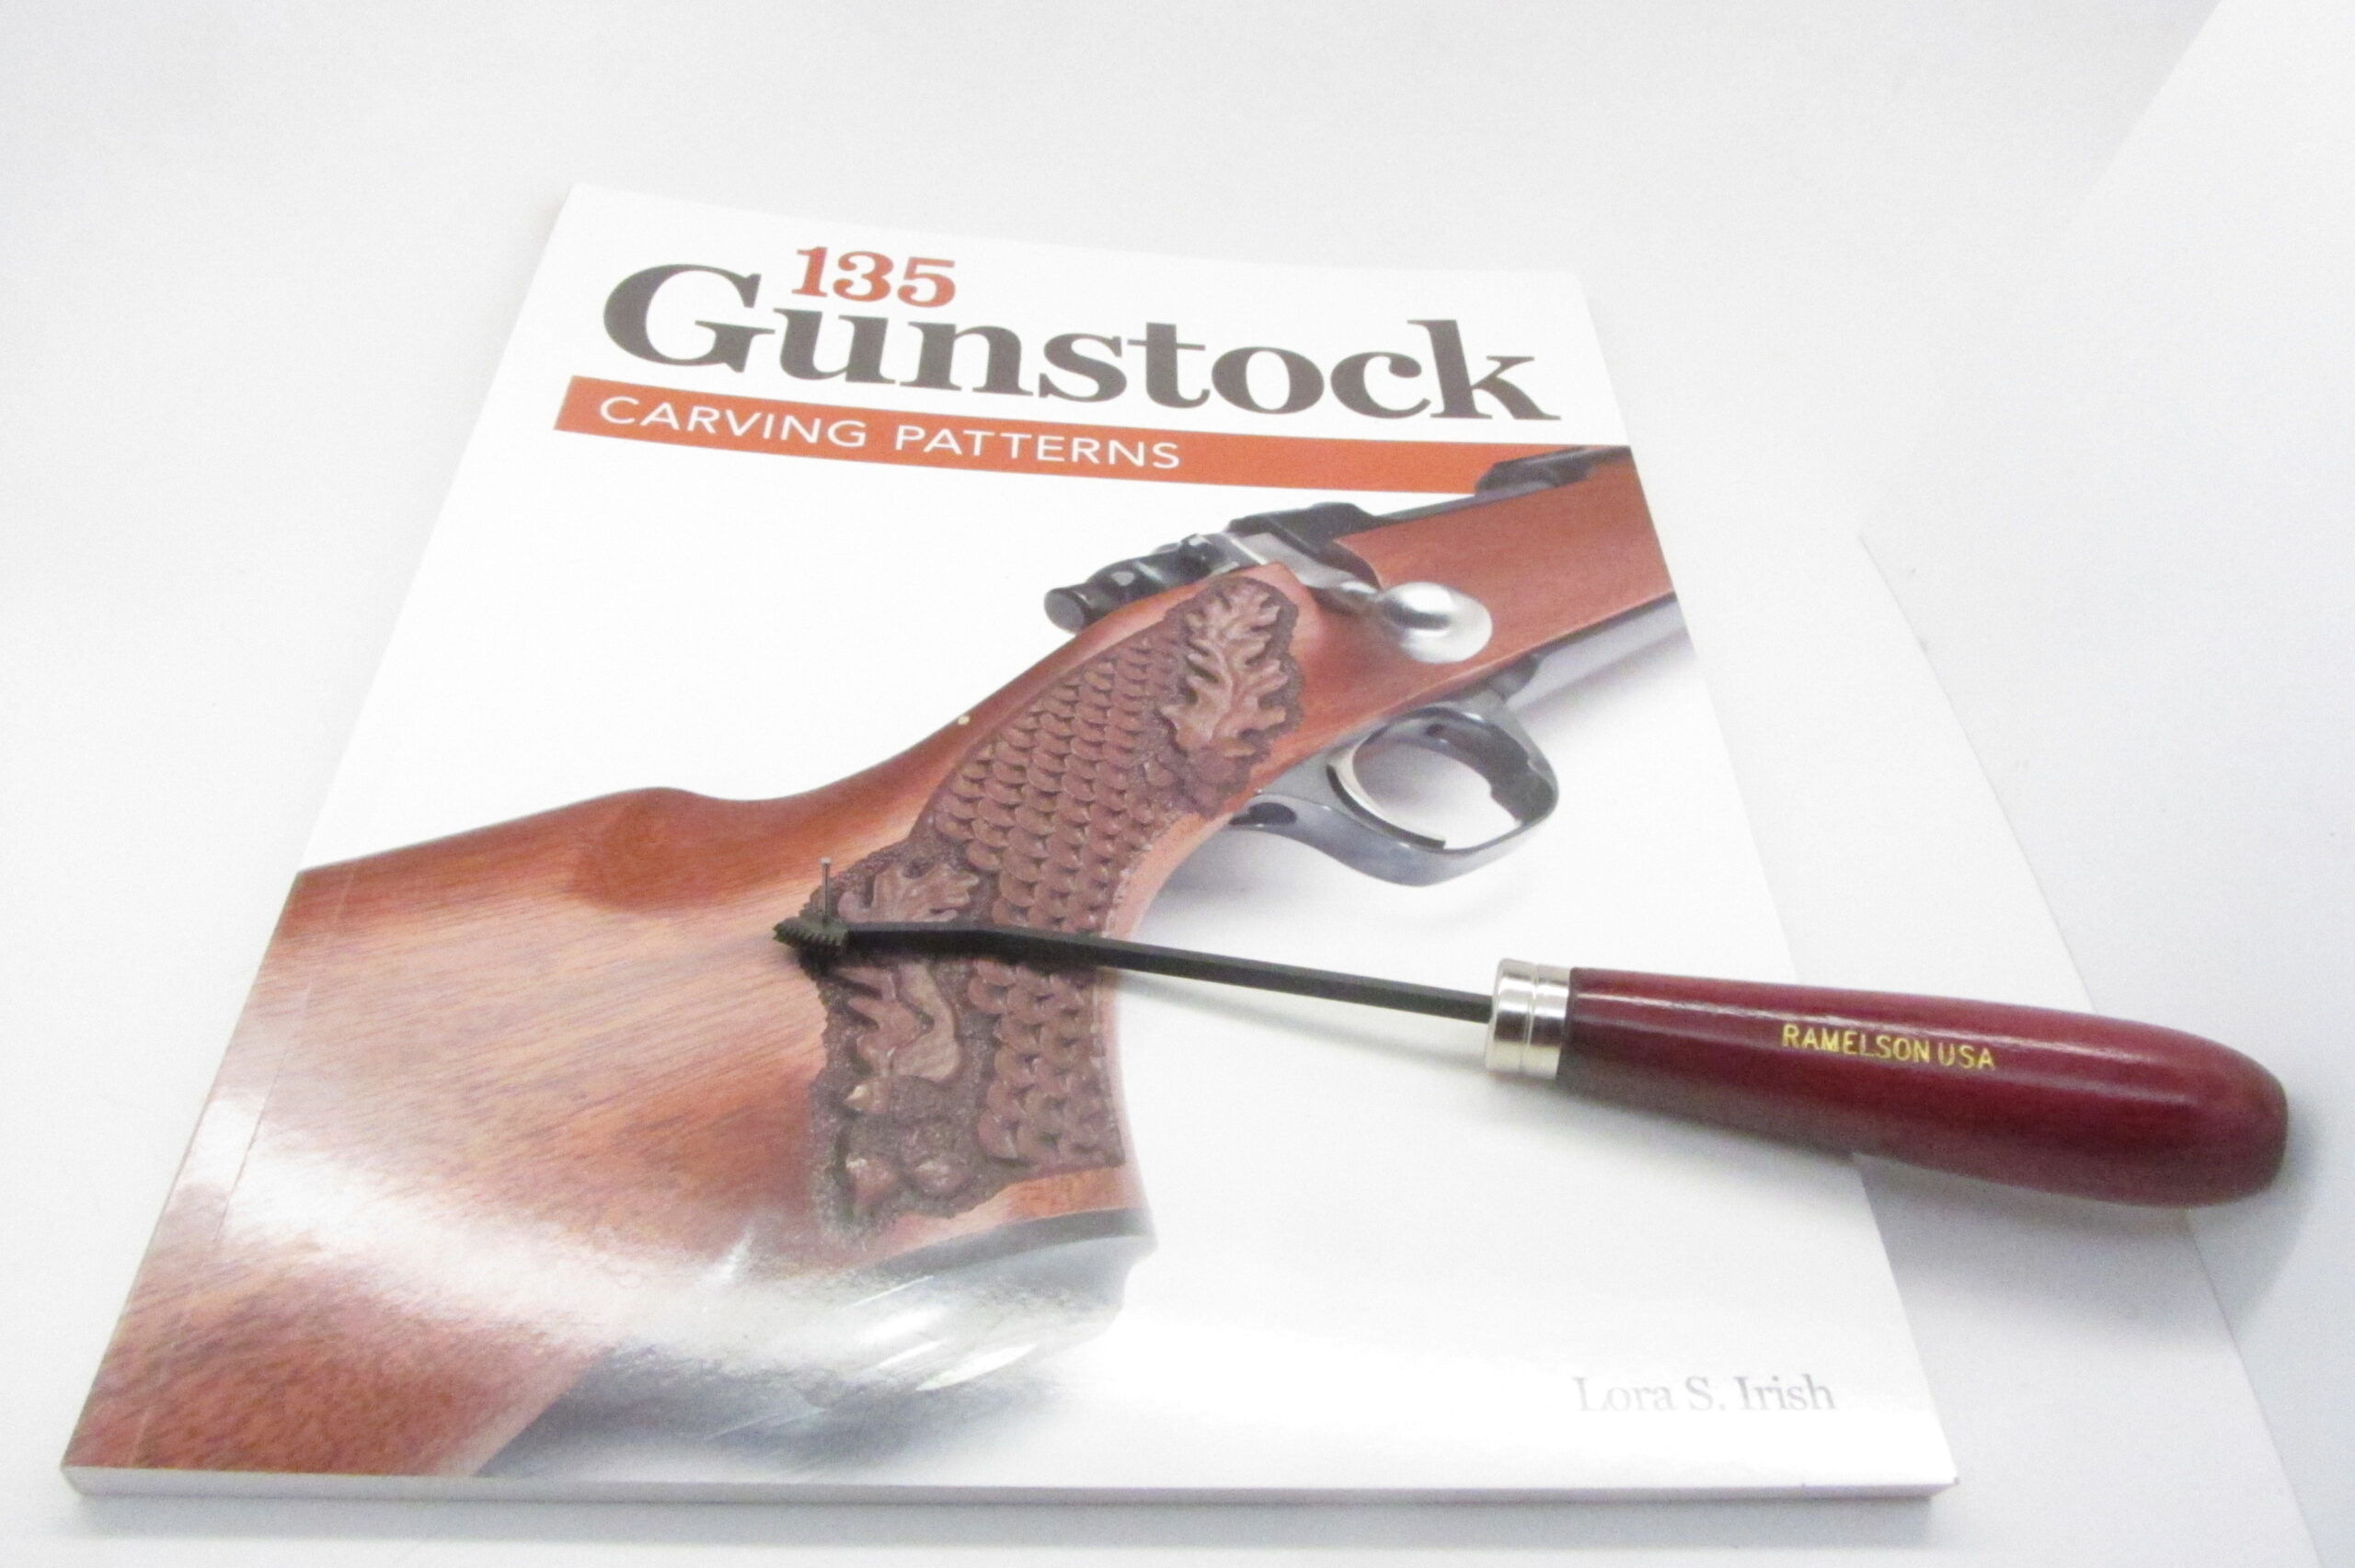 Veiner Line Restoration Gun Stock Gunsmtih Checkering Tool 1/8 60 RAMELSON  USA 